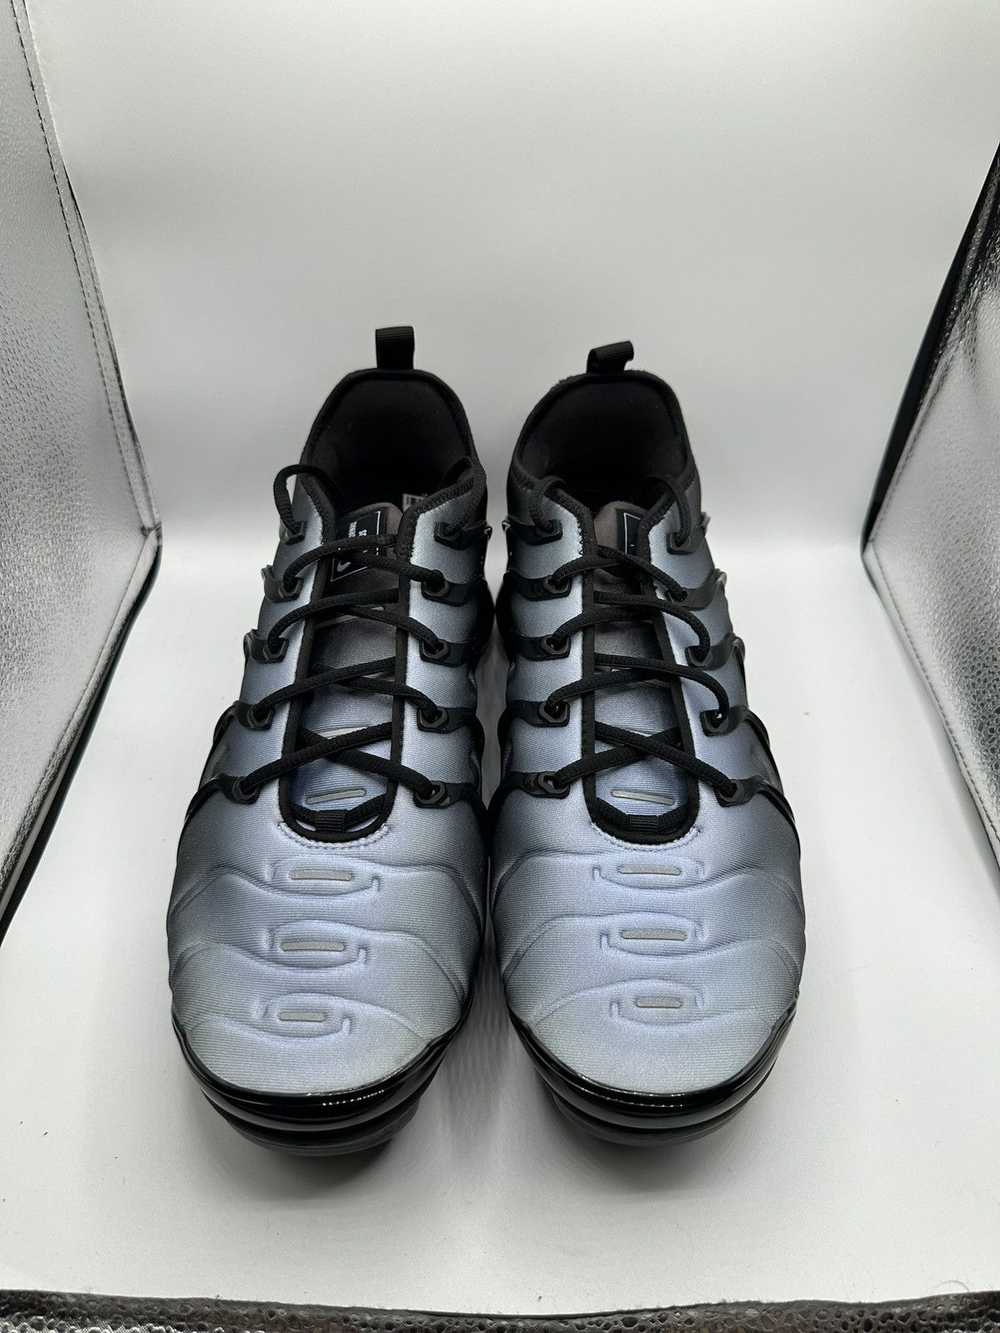 Nike Nike Air Vapormax Plus “Aluminum” - image 2